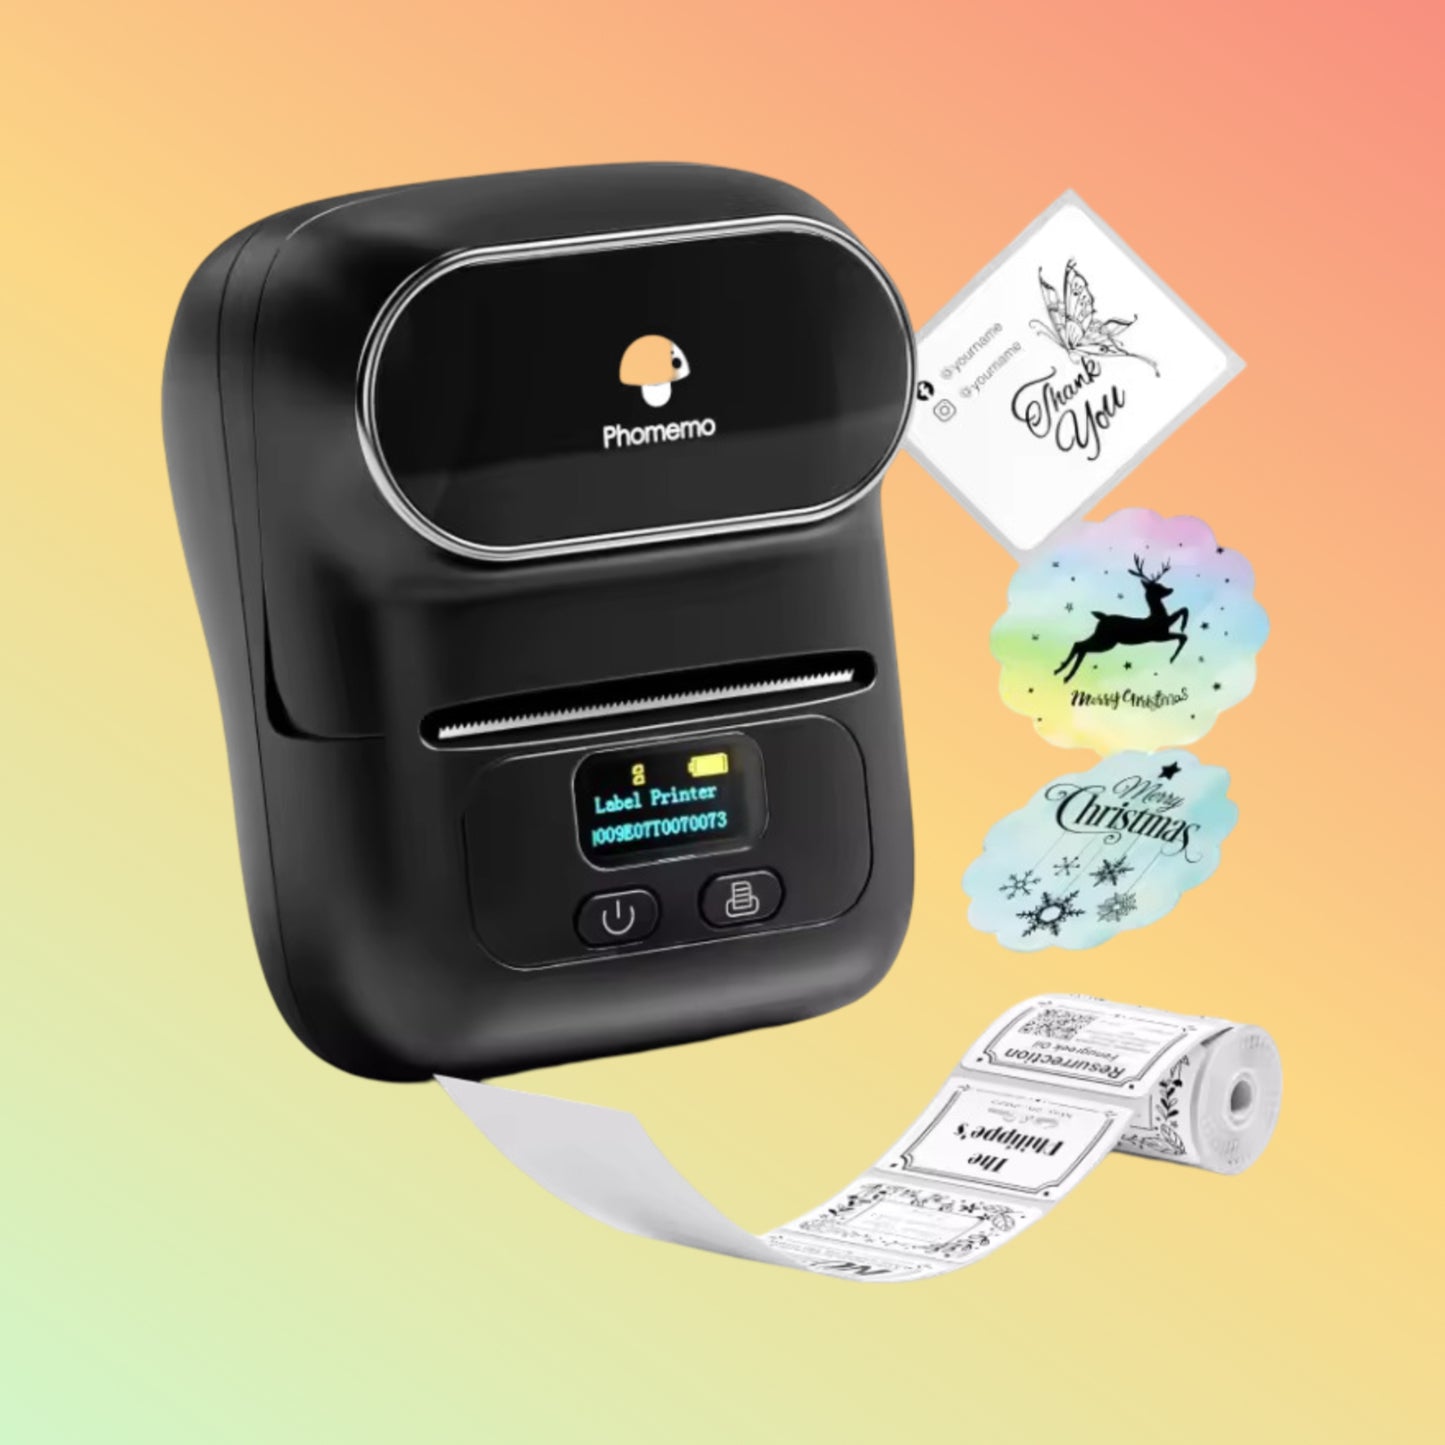 Phomemo M110 Label Printer – Compact, Versatile Barcode & Label Maker